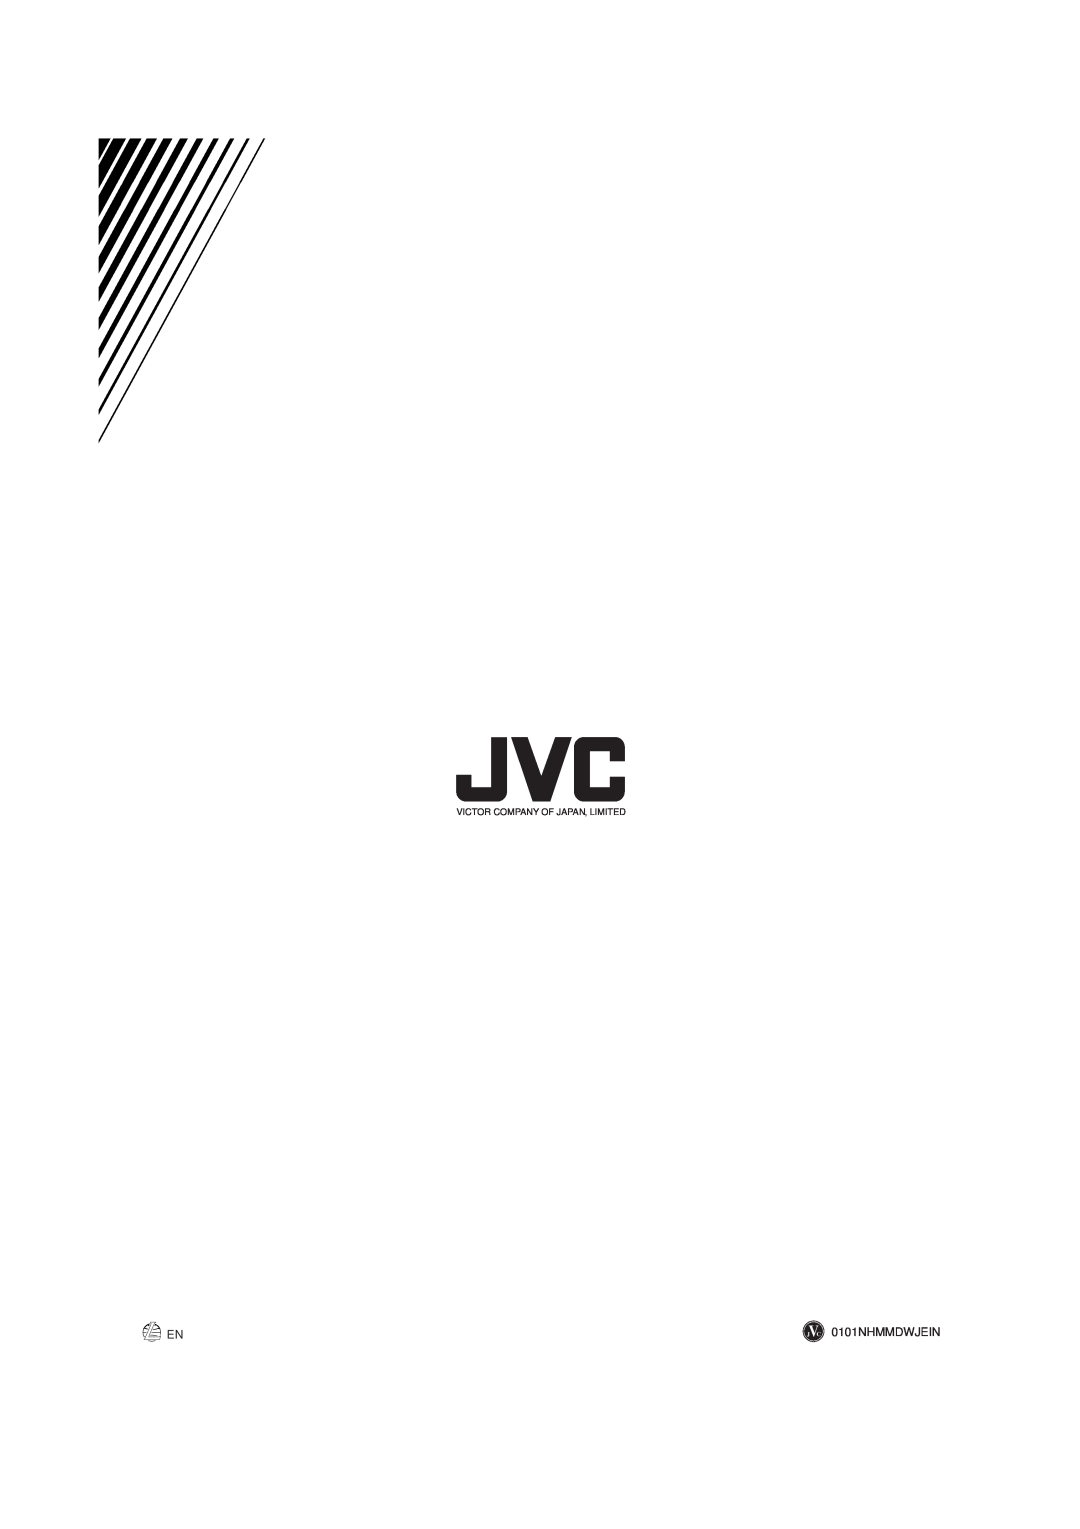 JVC rx-8010vbk manual JVC 0101NHMMDWJEIN, Victor Company Of Japan, Limited 